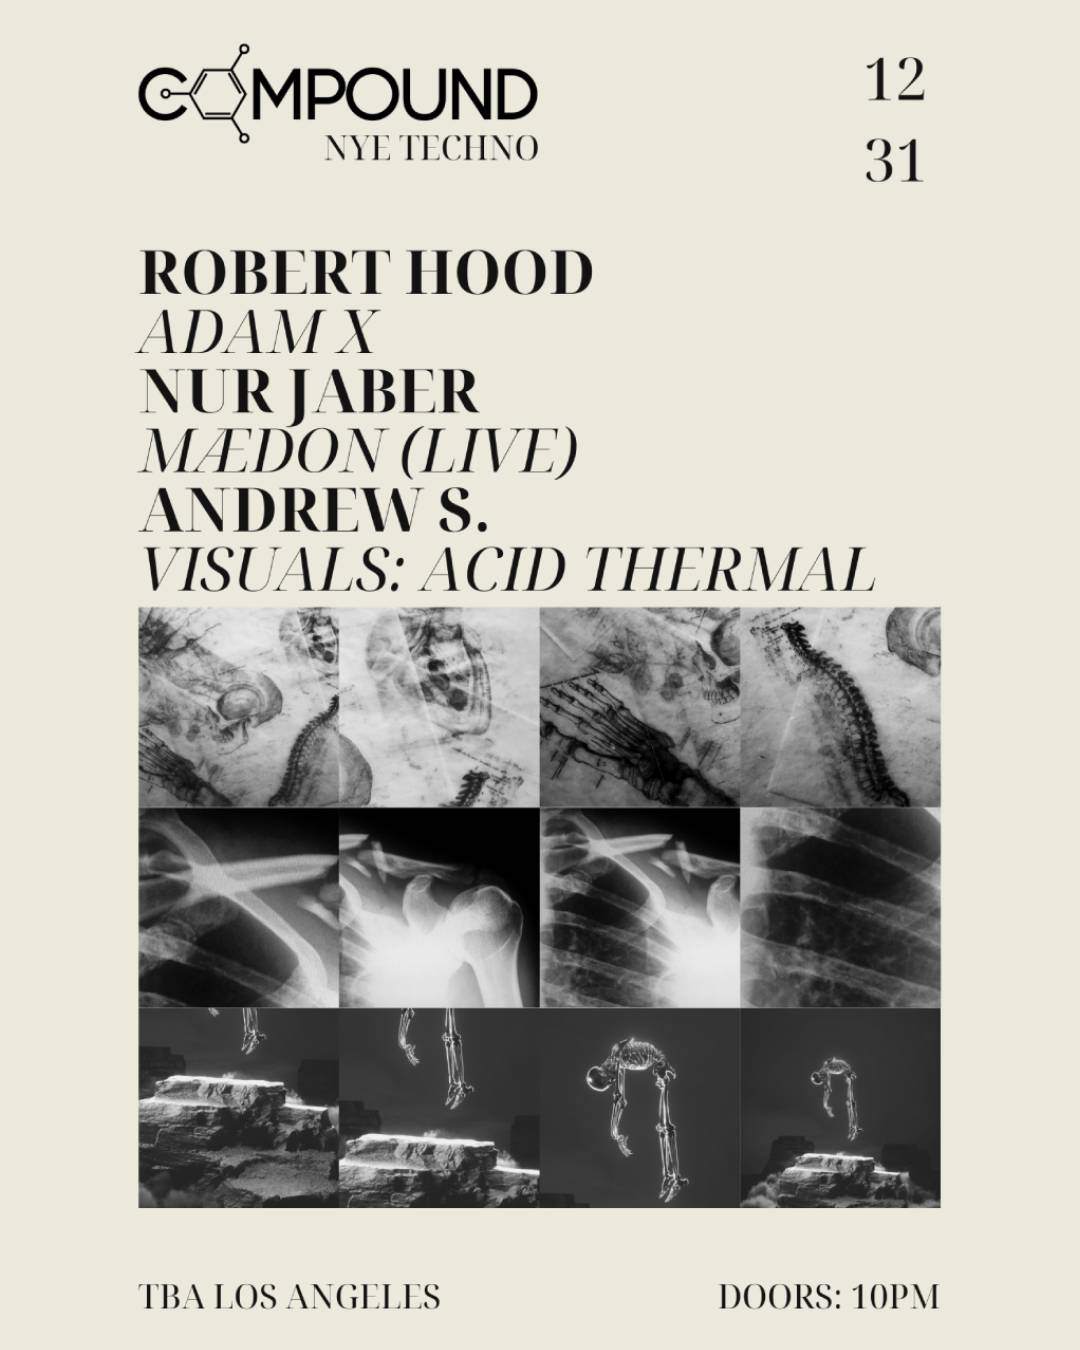 NYE Techno by COMPOUND: Robert Hood, Adam X, Nur Jaber, MÆDON (Live) & Andrew S - フライヤー表